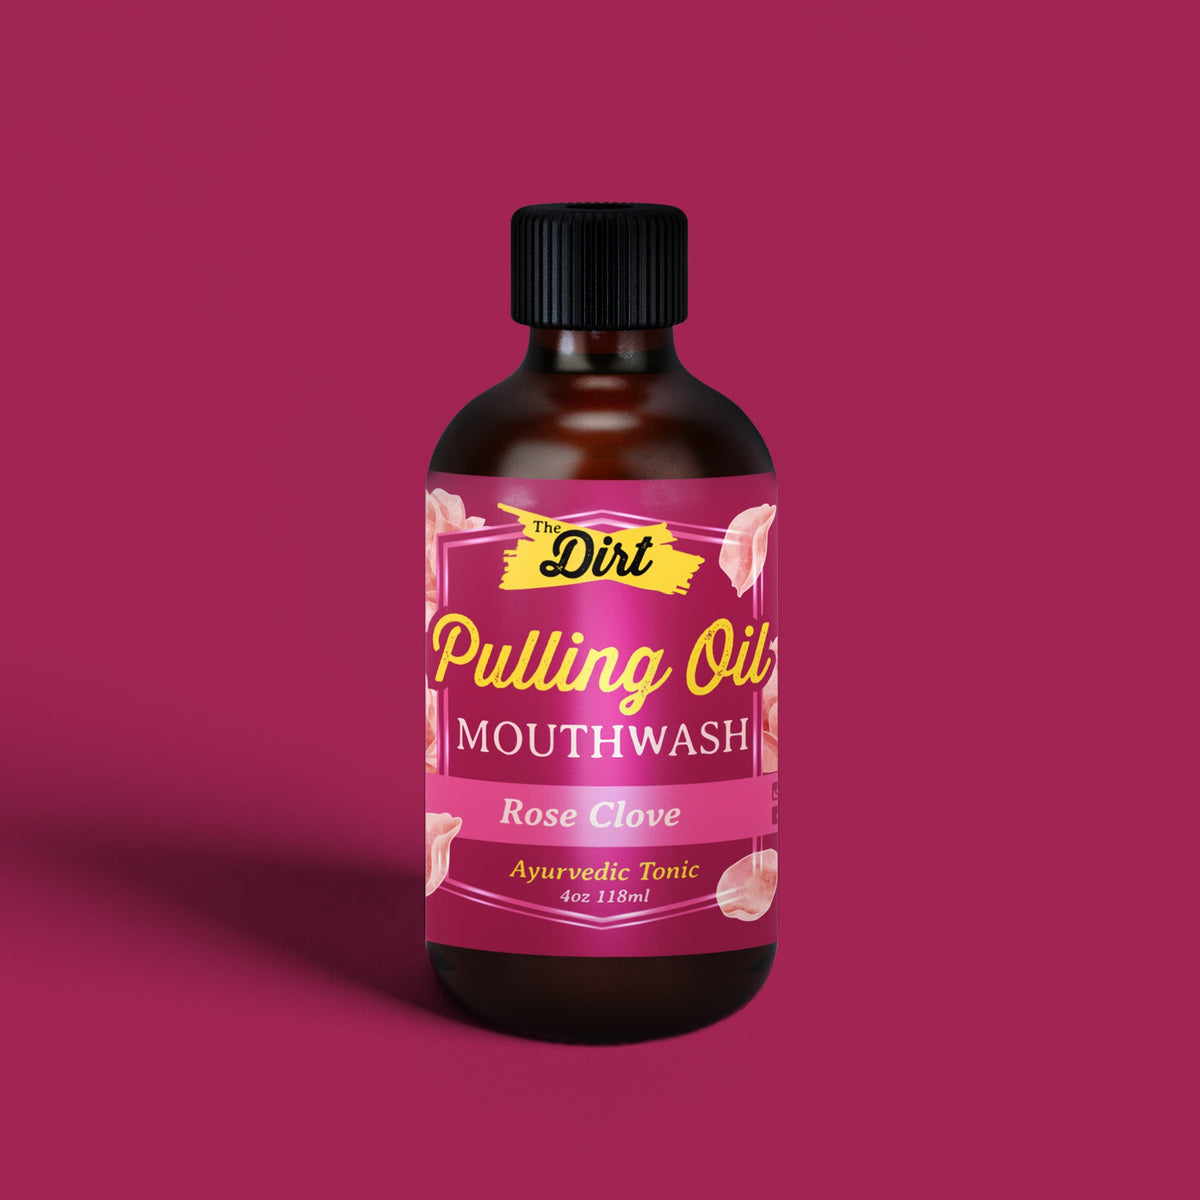 Buy with Prime Pulling Oil Mouthwash - The Dirt - Super Natural Oral Care 4oz / Rose Clove Mint Oral Care